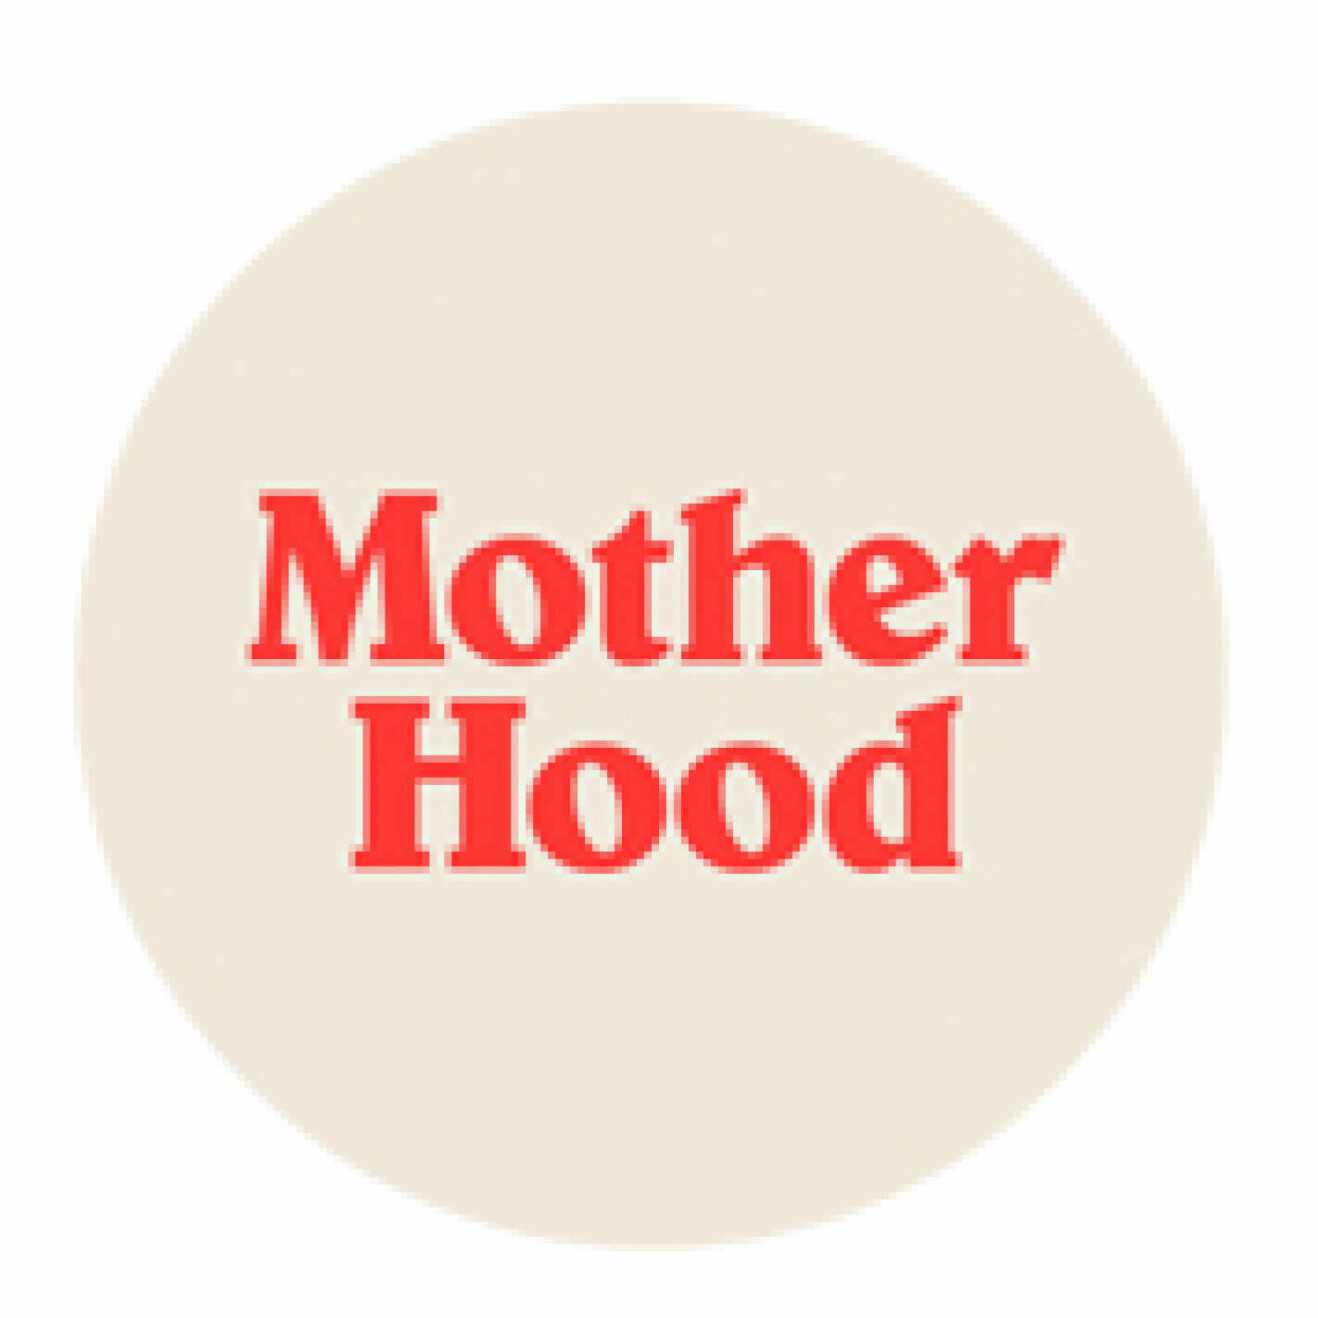 https://image.motherhood.se/motherhood-logo-biline.jpg.jpg?imageId=6441816&x=0&y=0&cropw=100&croph=100&width=1318&height=1318